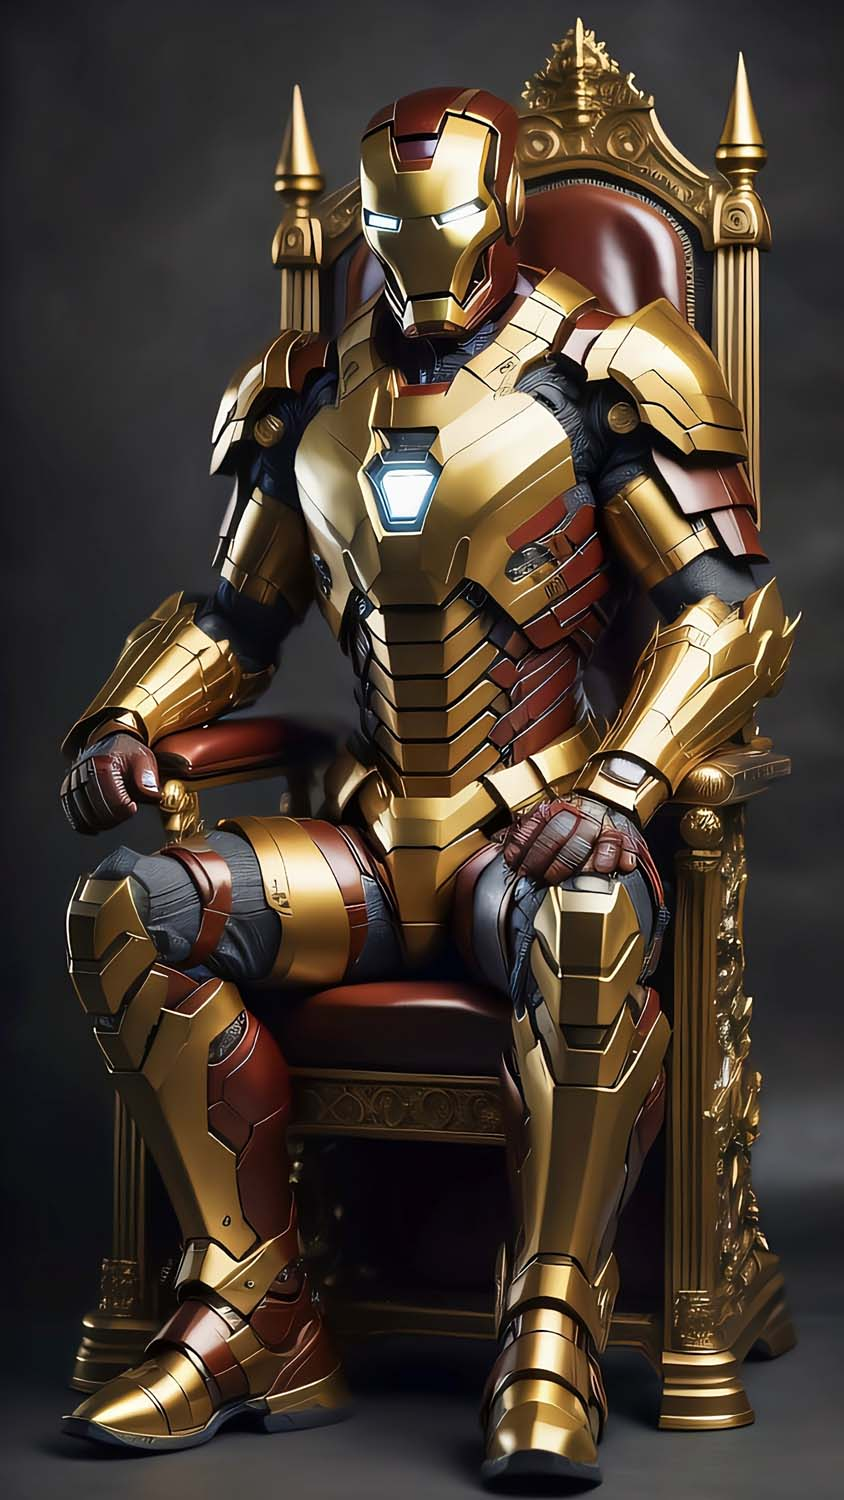 Iron Man Throne iPhone Wallpaper 4K  iPhone Wallpapers